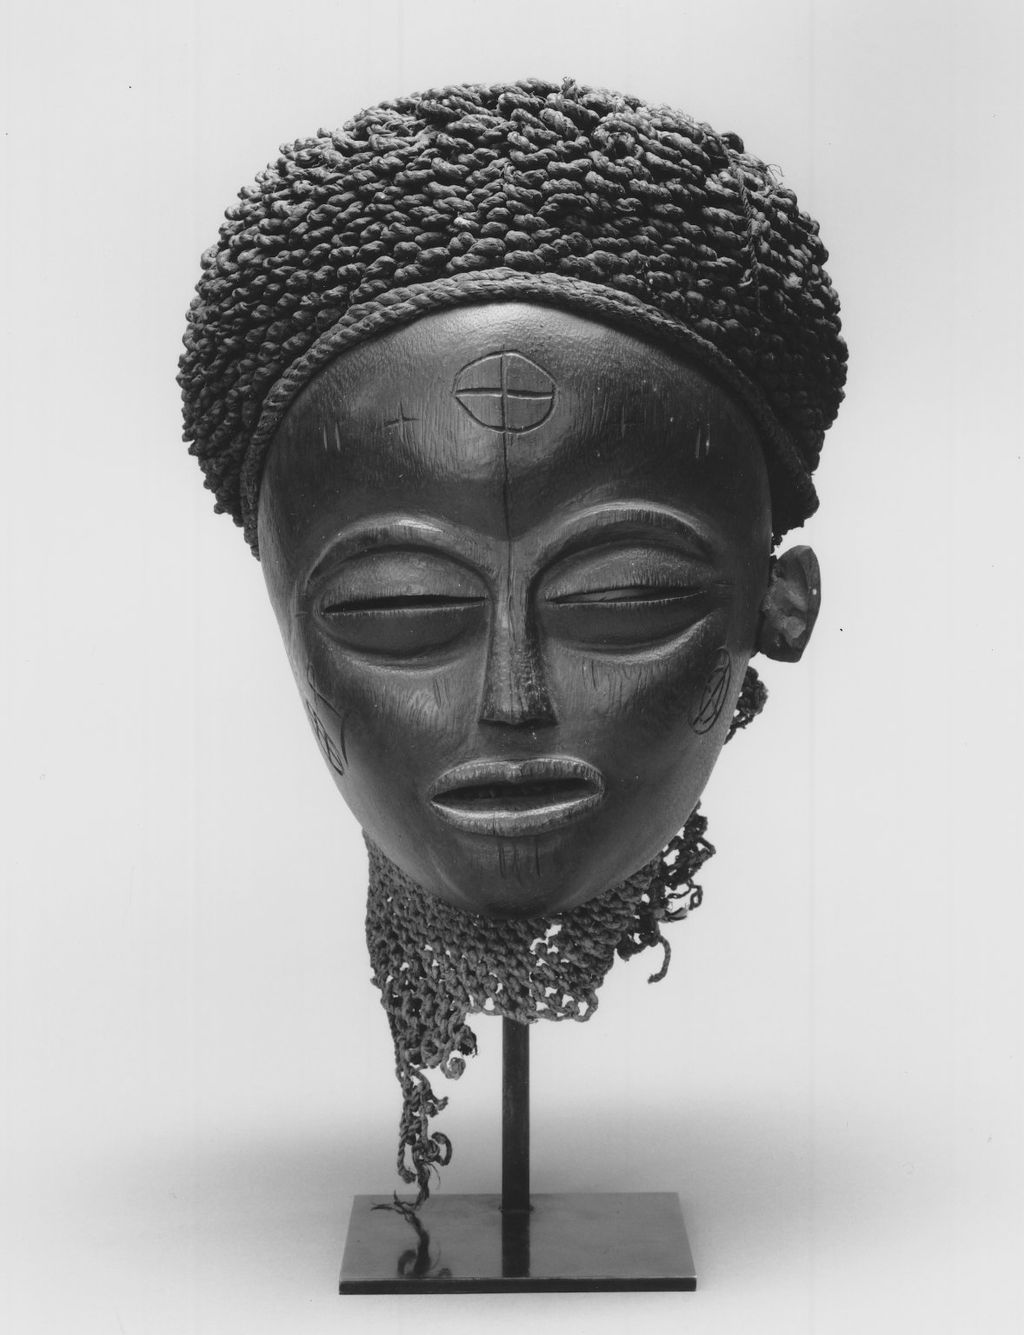 Brooklyn_Museum_1992.133.3_Mask_Mwana_Pwo-CC BY 3.0.jpg